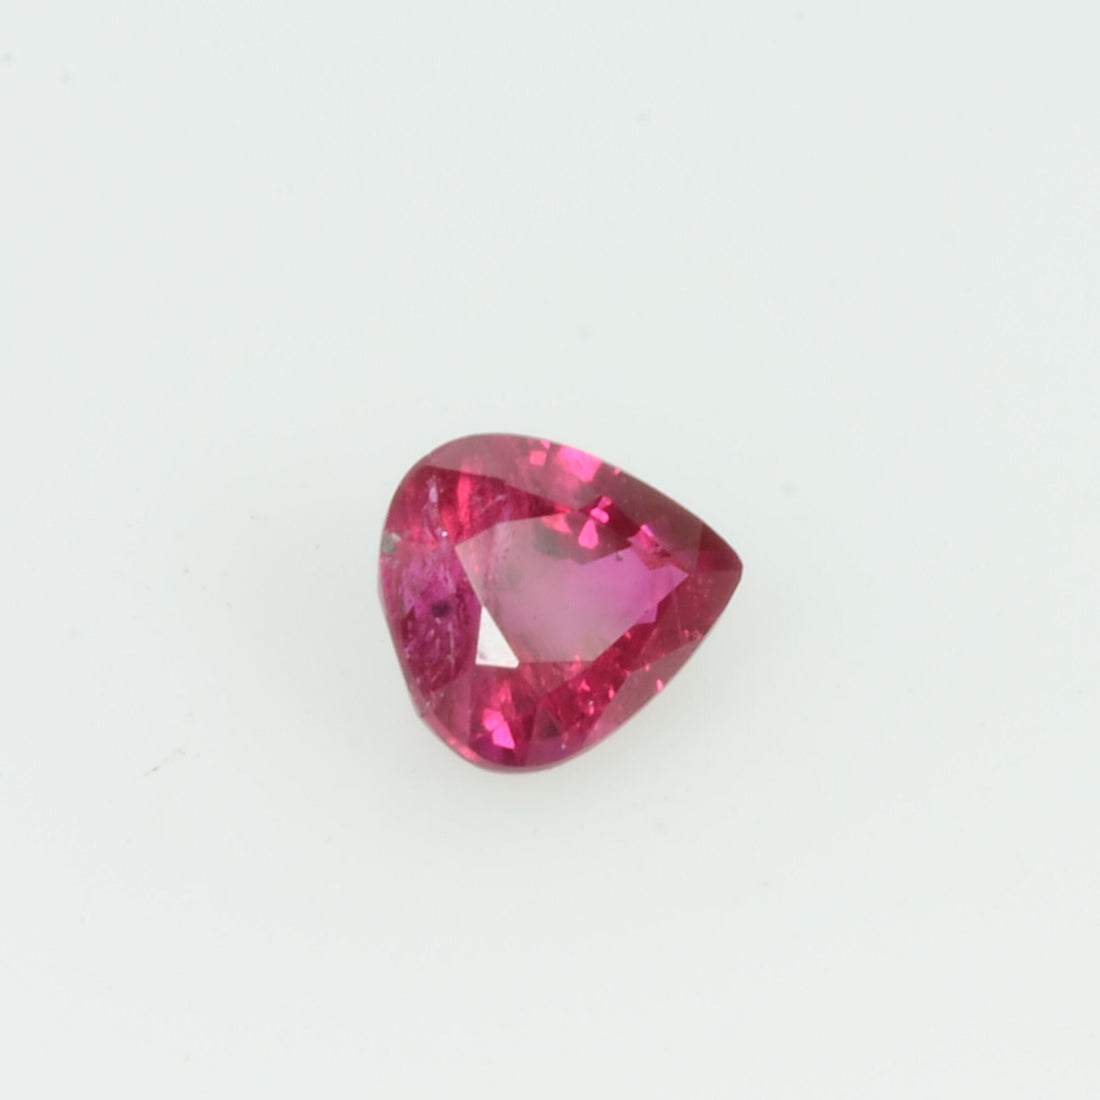 0.27 cts Natural Vietnam Ruby Loose Gemstone Pear Cut